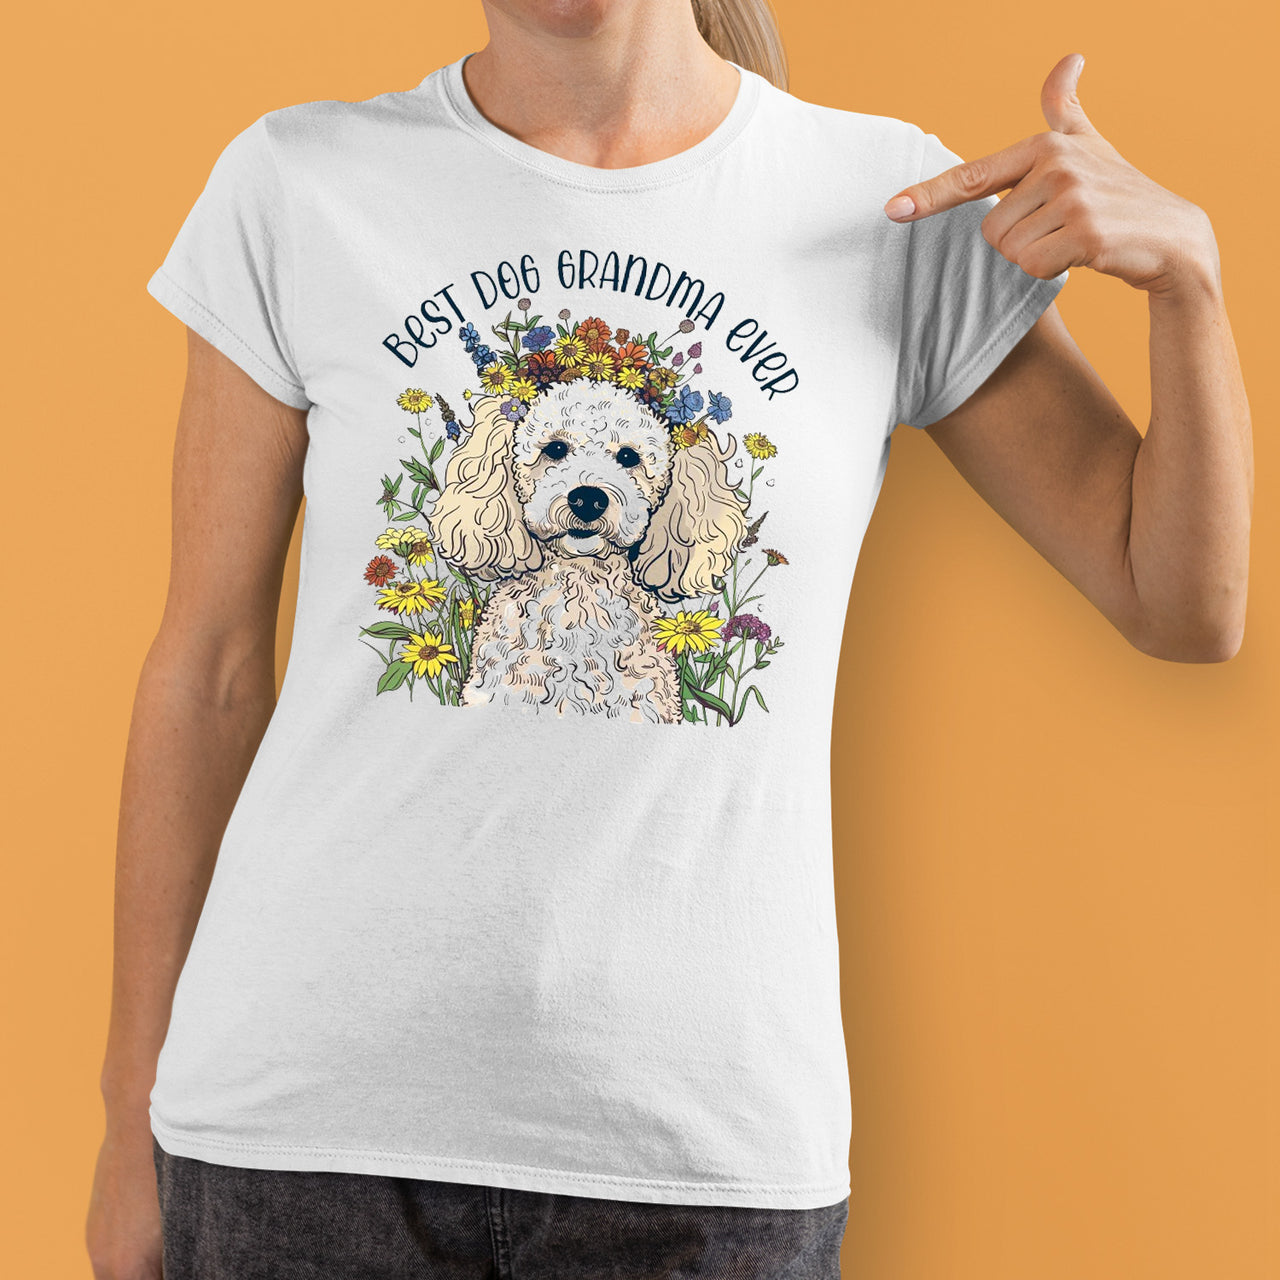 Poodle Dog T-shirt, Pet Lover Shirt, Dog Lover Shirt, Best Dog Grandma Ever T-Shirt, Dog Owner Shirt, Gift For Dog Grandma, Funny Dog Shirts, Women Dog T-Shirt, Mother's Day Gift, Dog Lover Wife Gifts, Dog Shirt